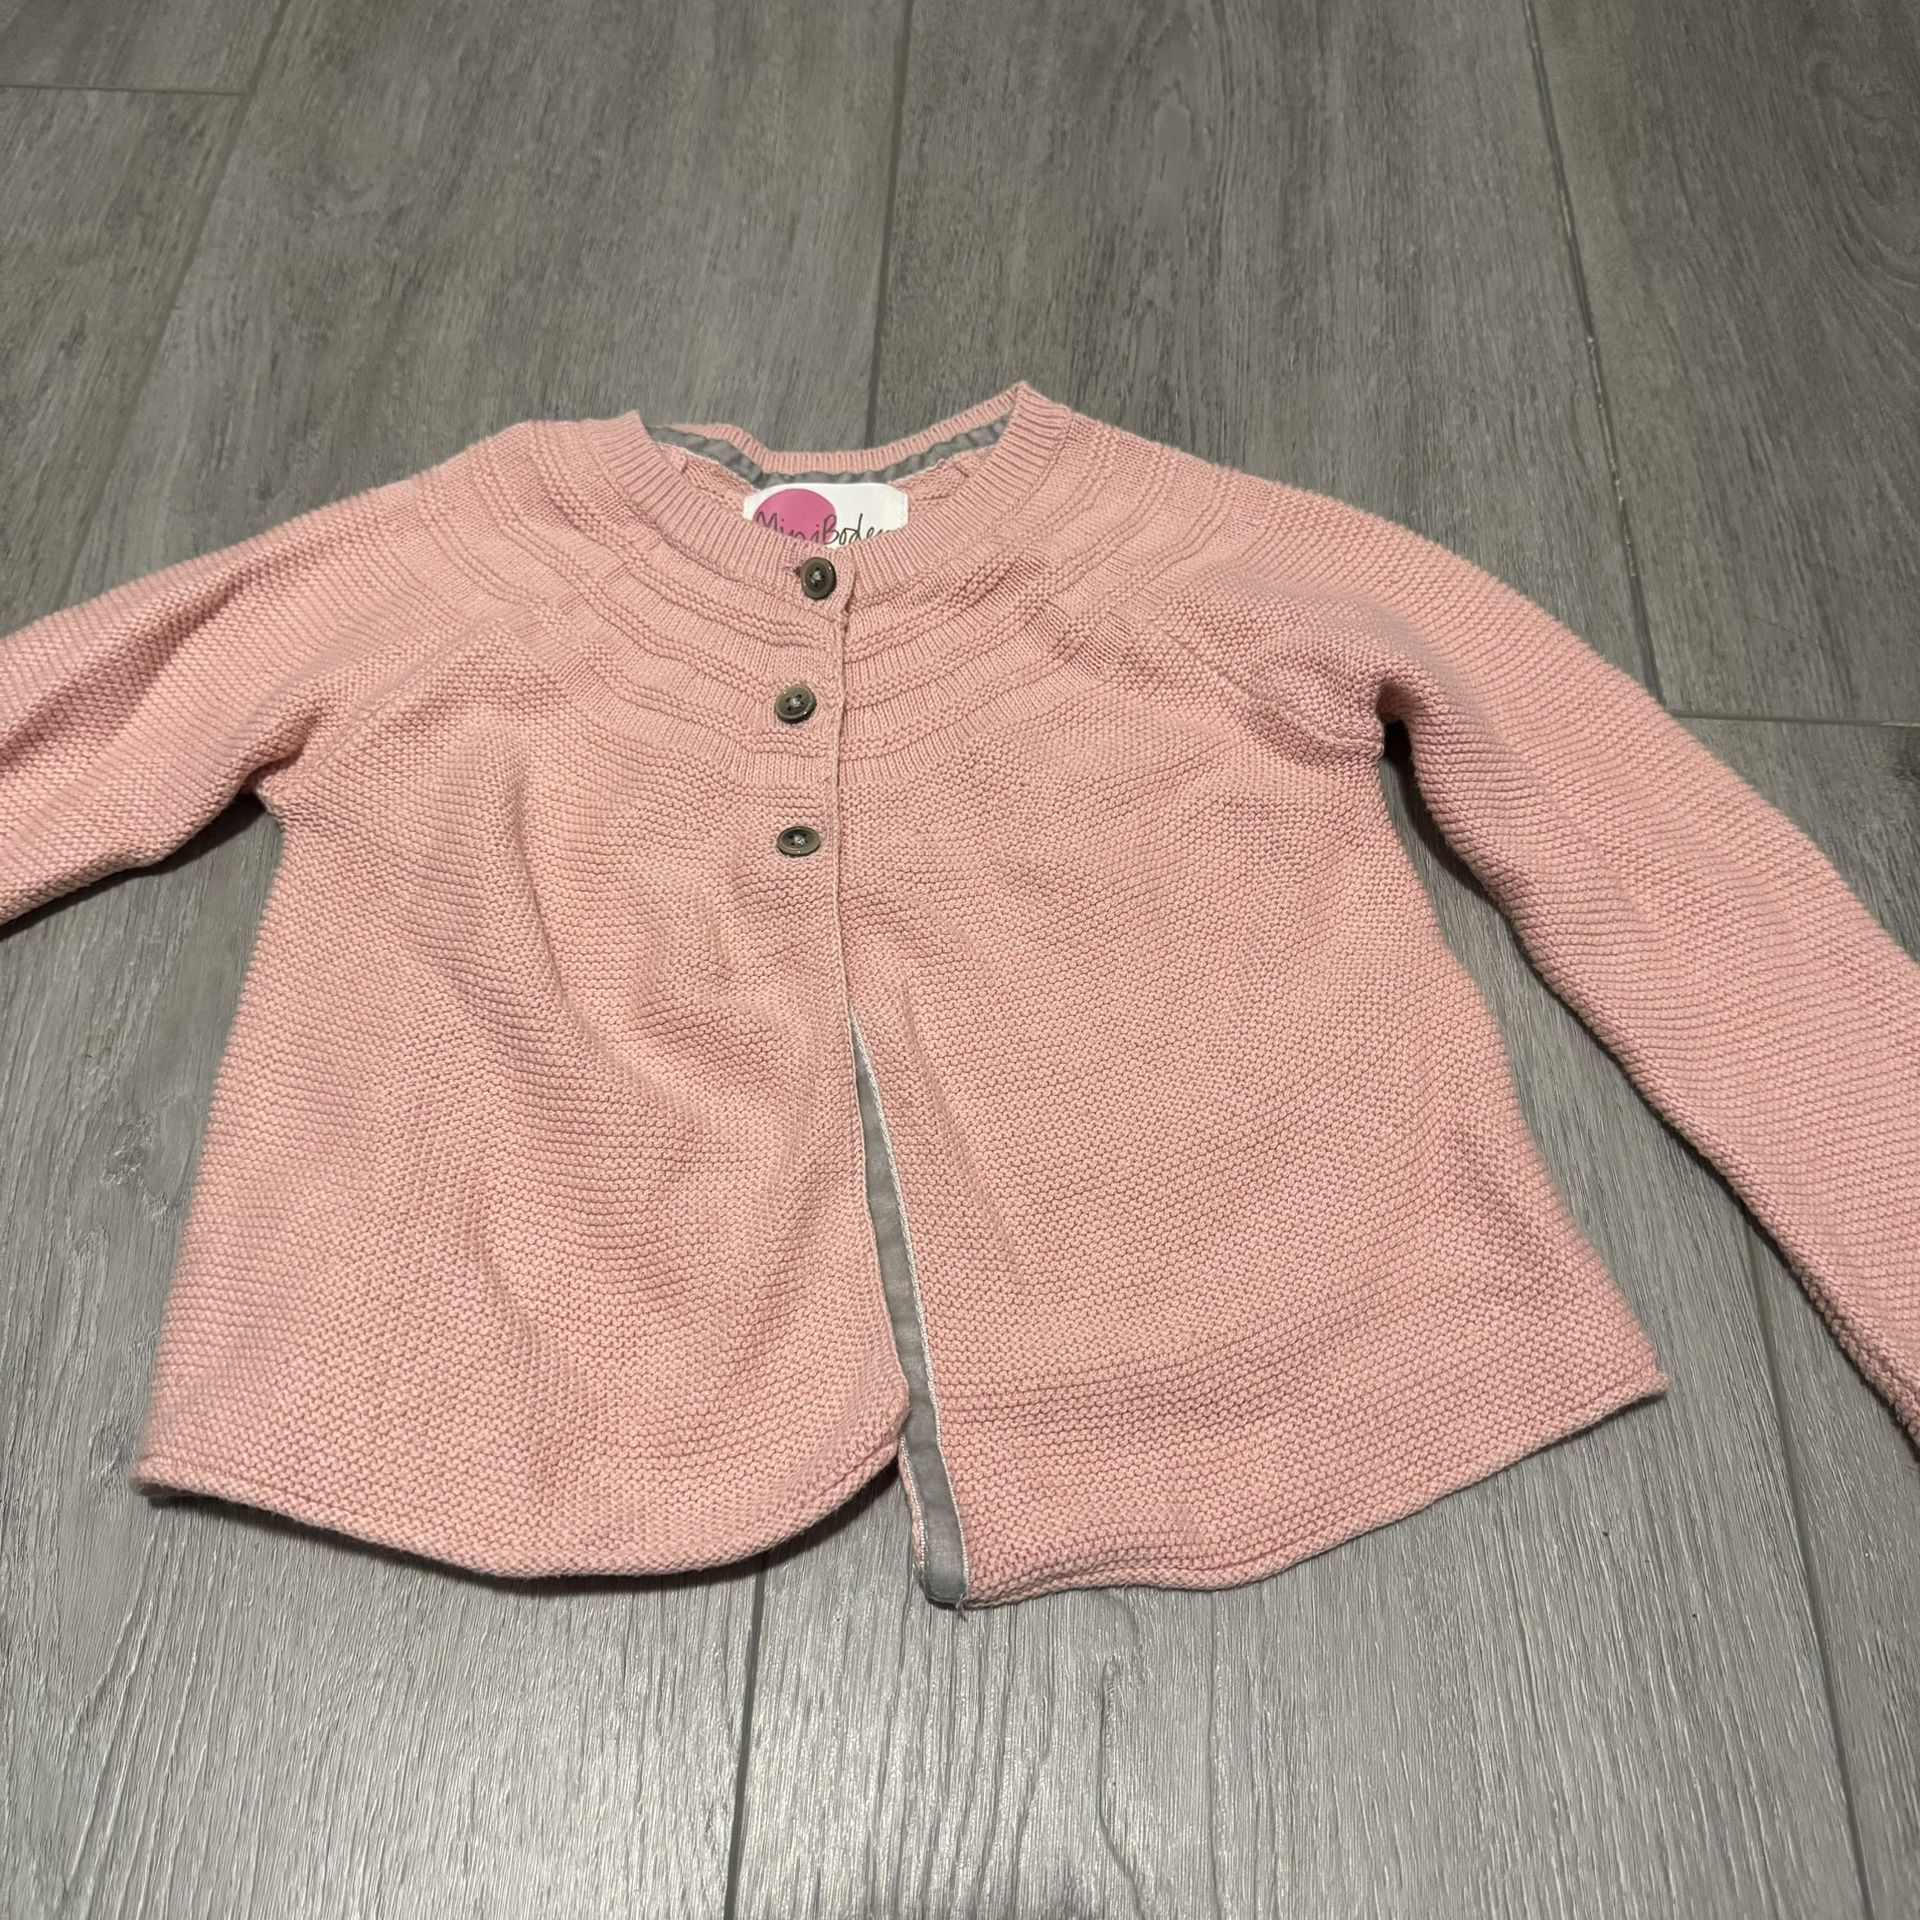 Mini Boden 4-5y pink knit cardigan